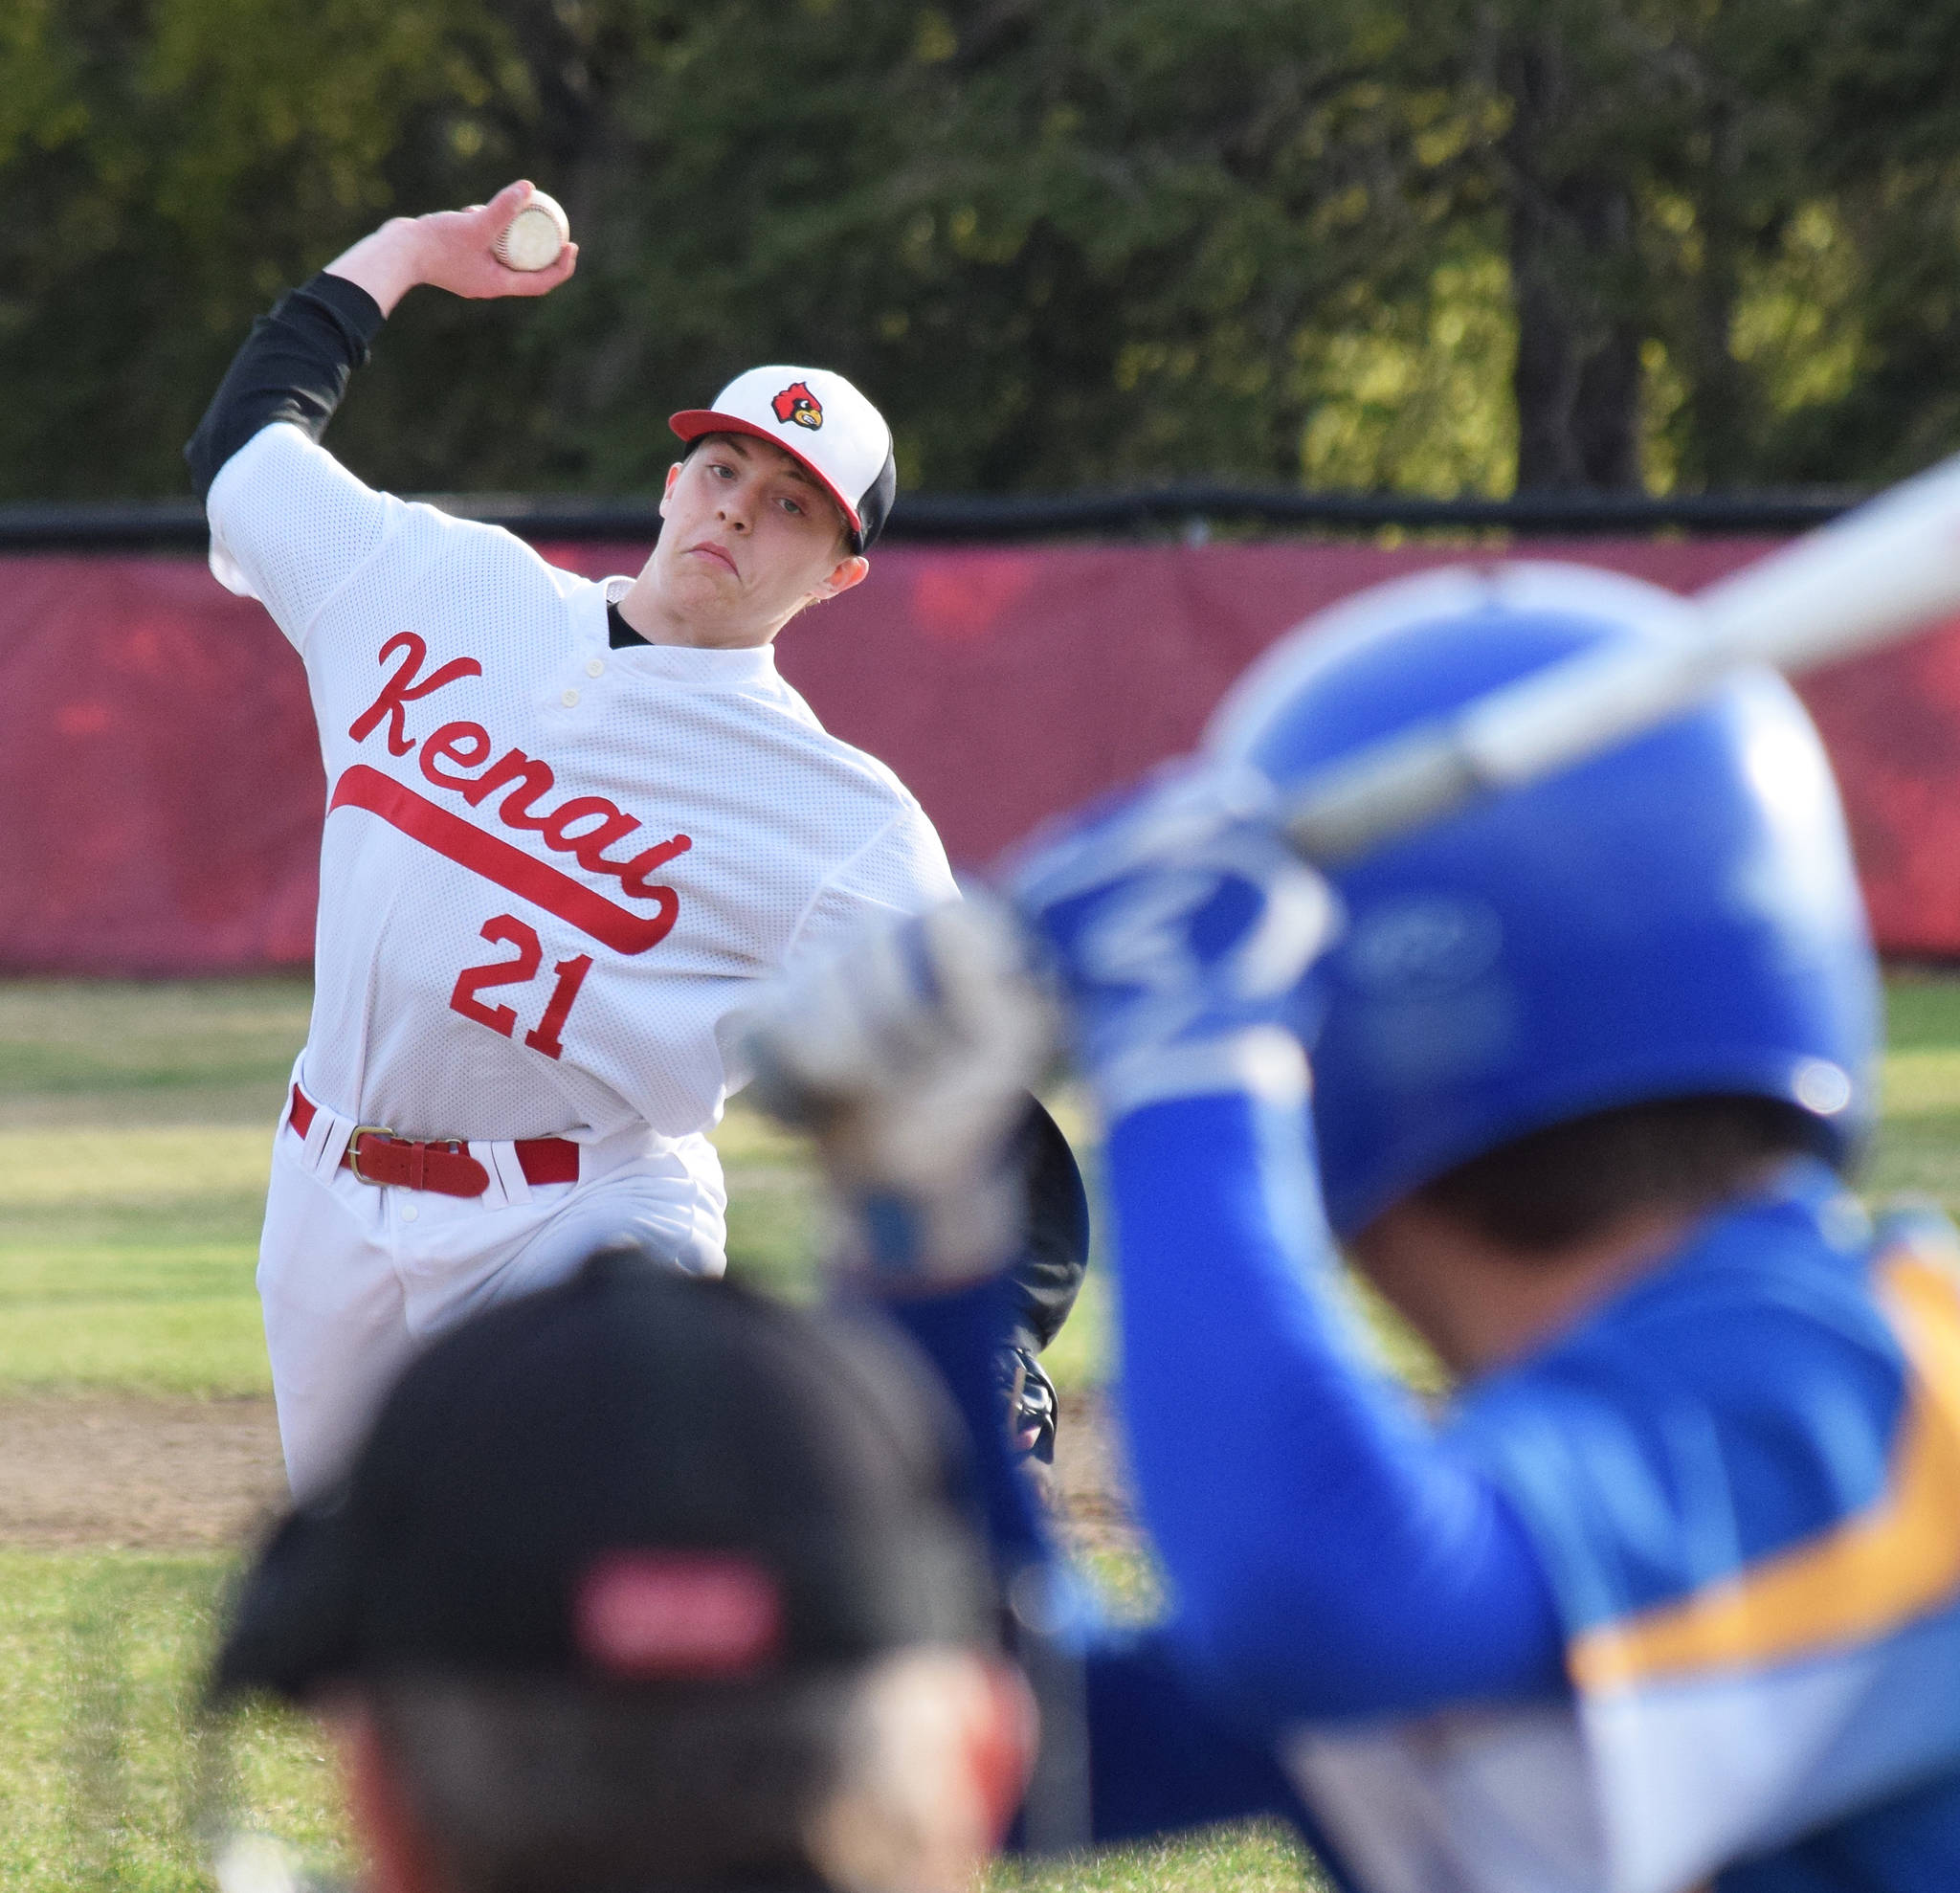 Kenai’s Parker Mattox unleashes a pitch against a Kodiak batter Thursday, May 16, 2019, at the Kenai Little League Fields in Kenai, Alaska. (Photo by Joey Klecka/Peninsula Clarion)